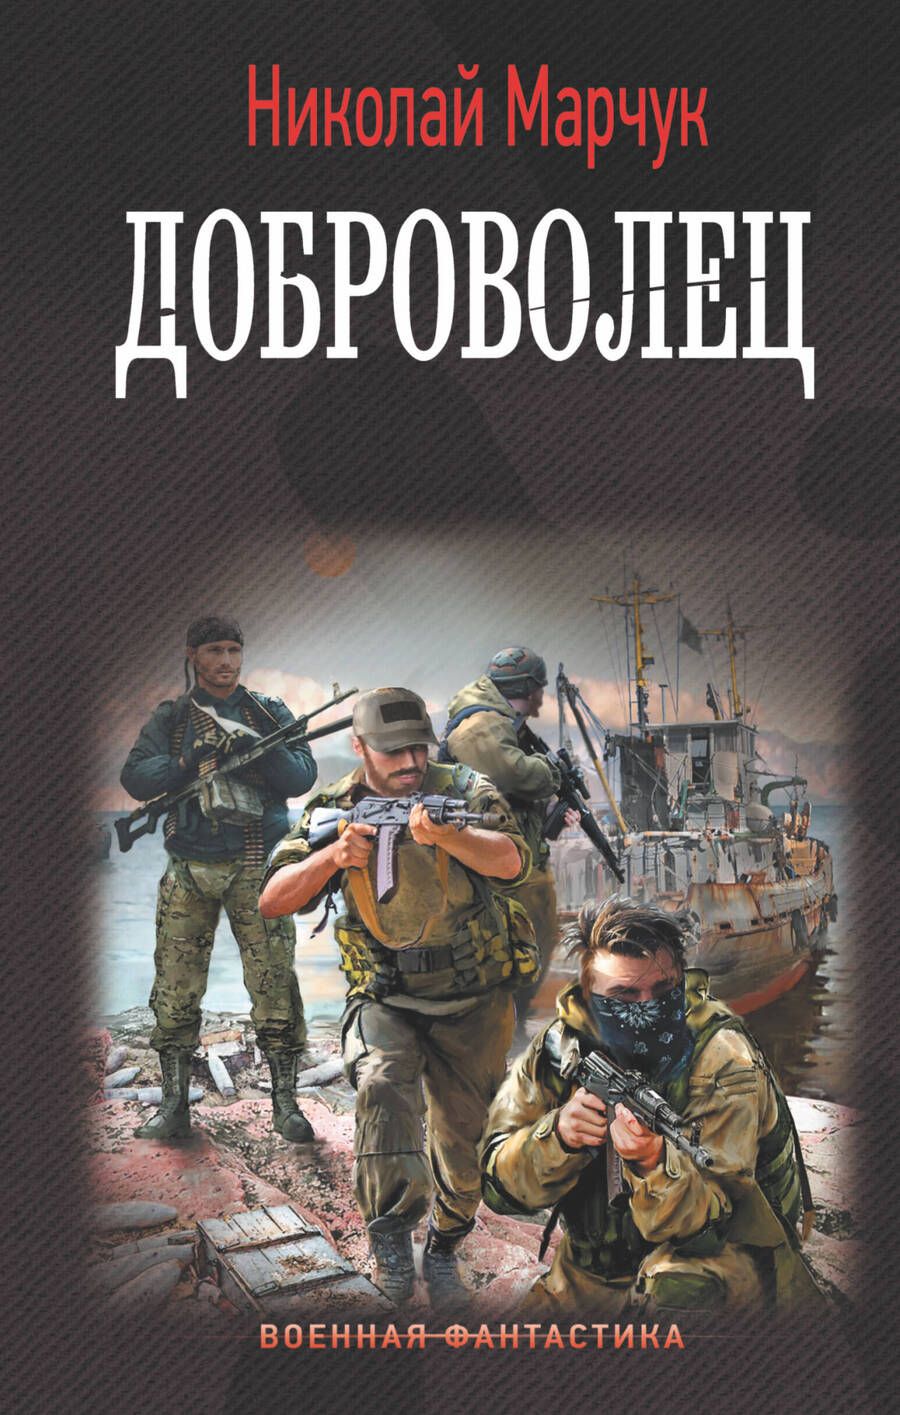 Обложка книги "Марчук: Доброволец"